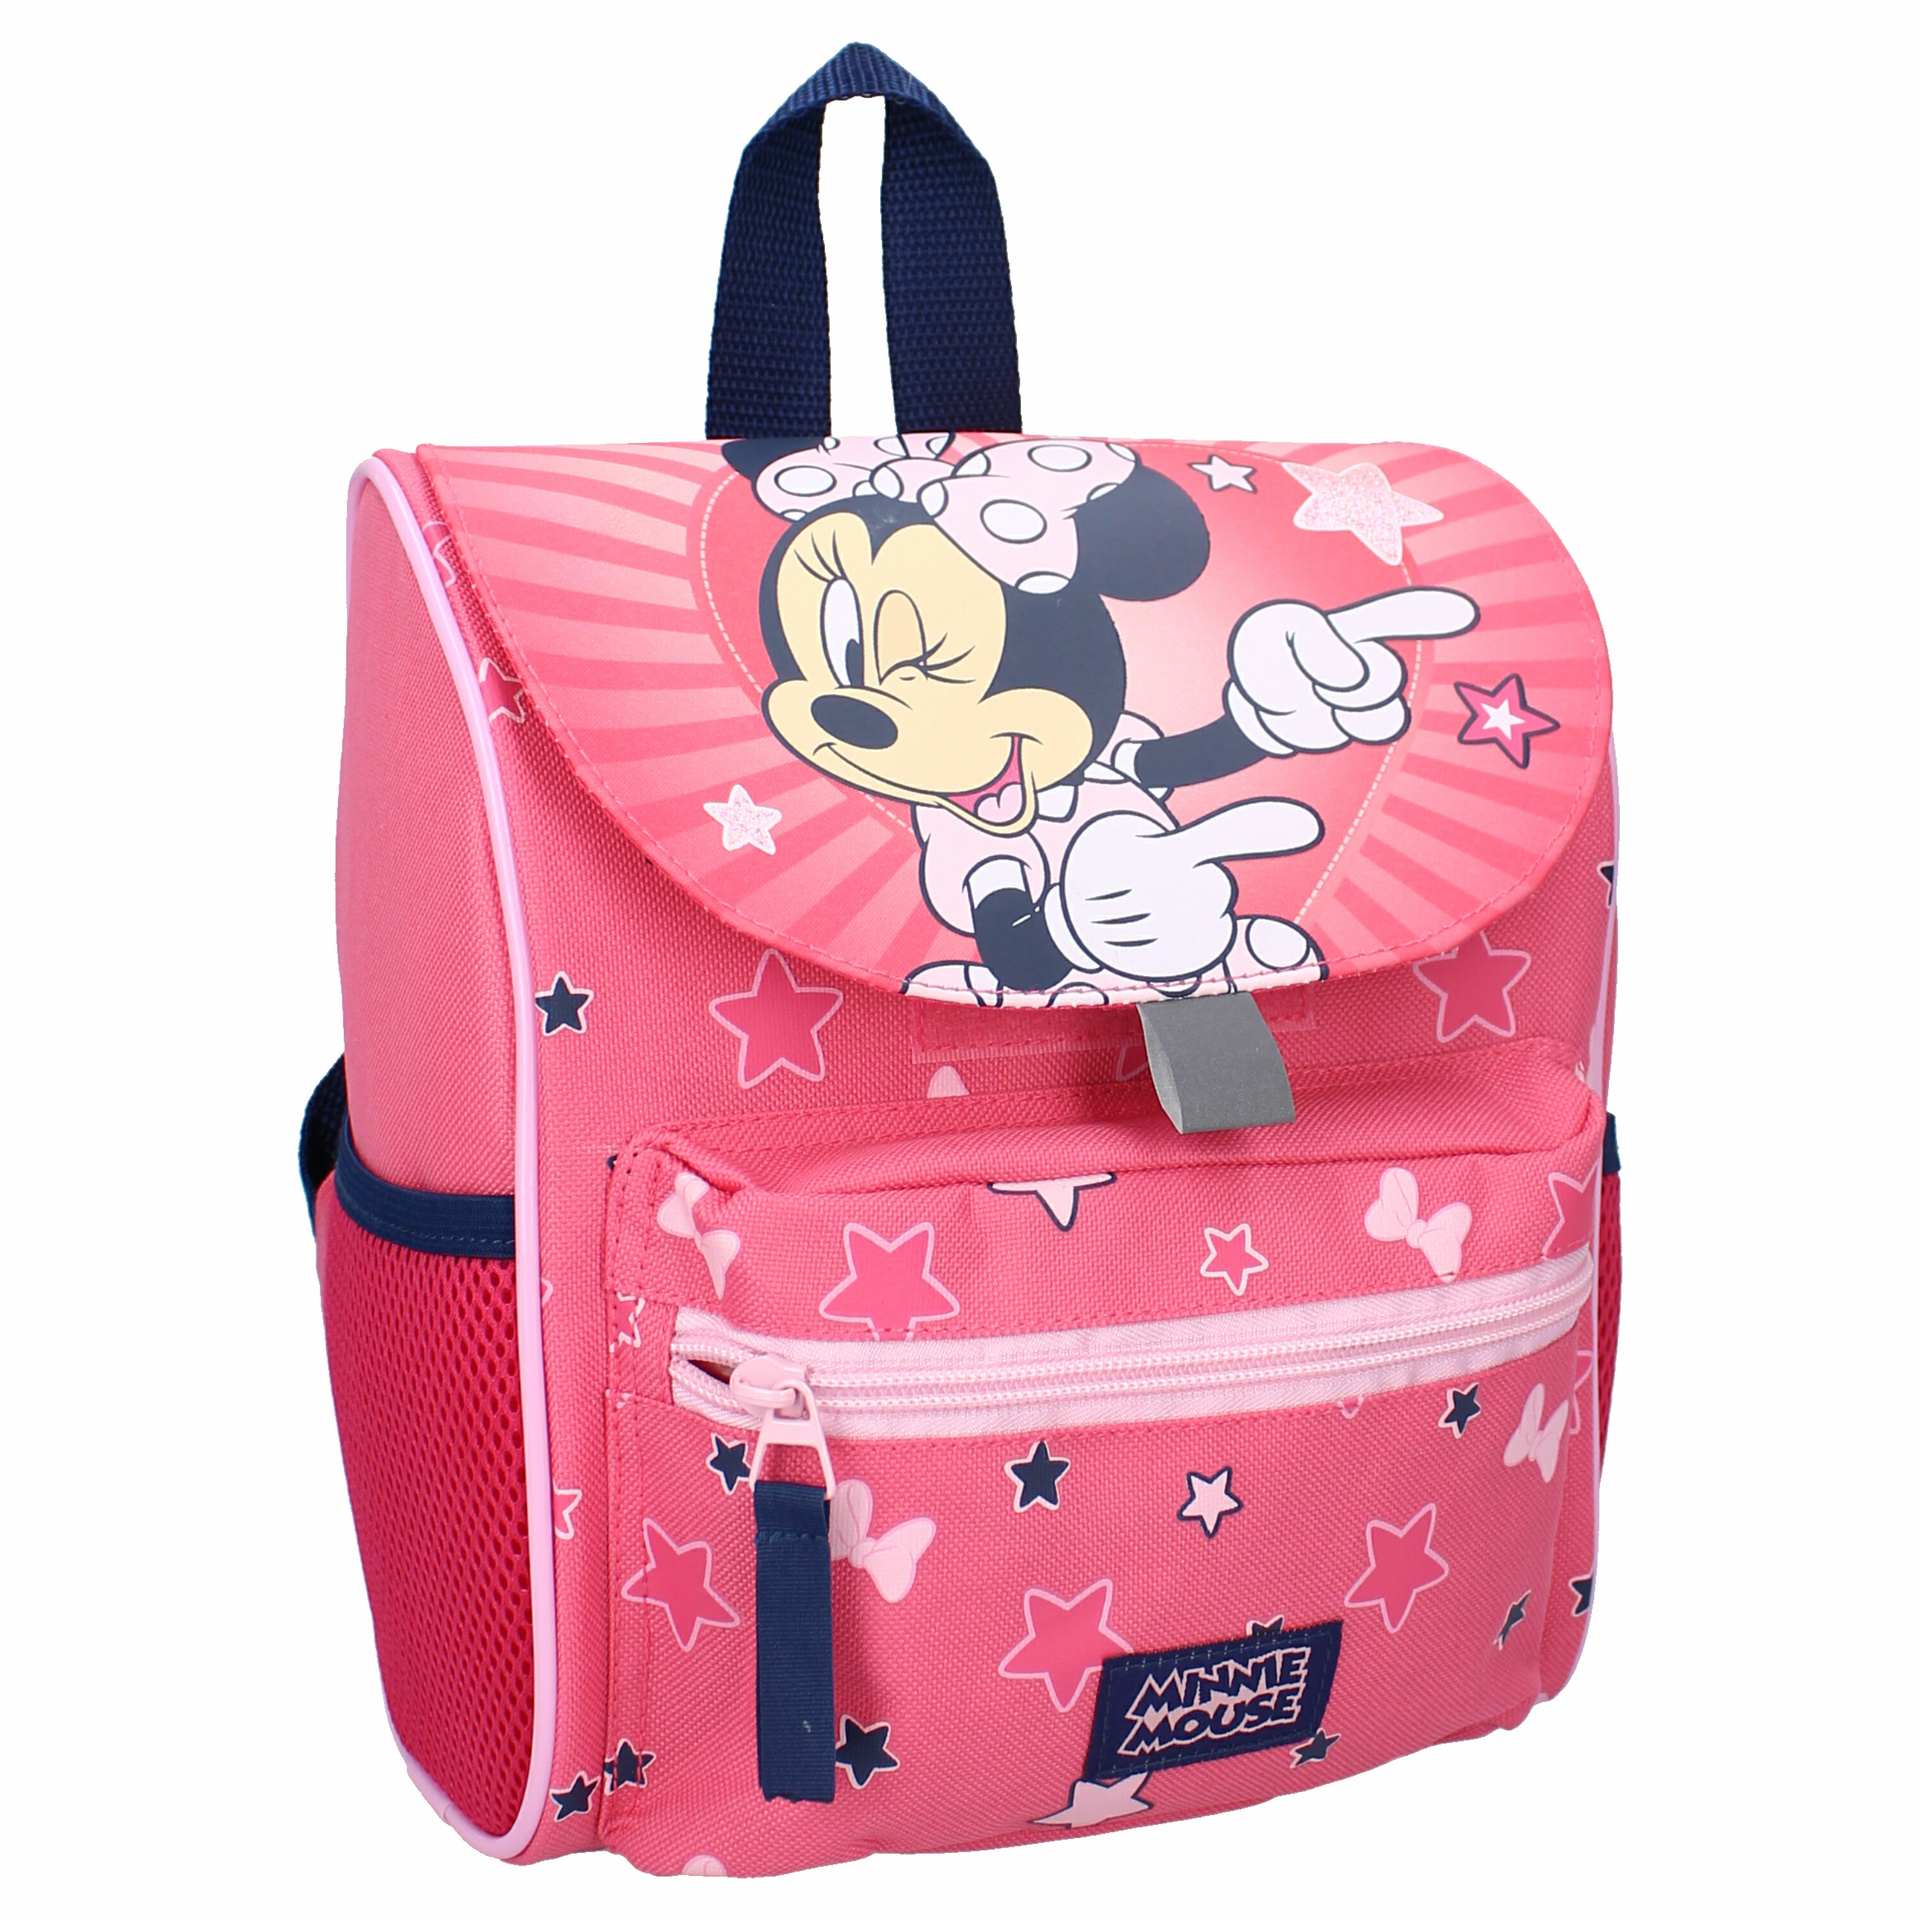 Namaak Kruipen spoor Disney Minnie Mouse rugtas kopen? - Ultimate Travelstyle